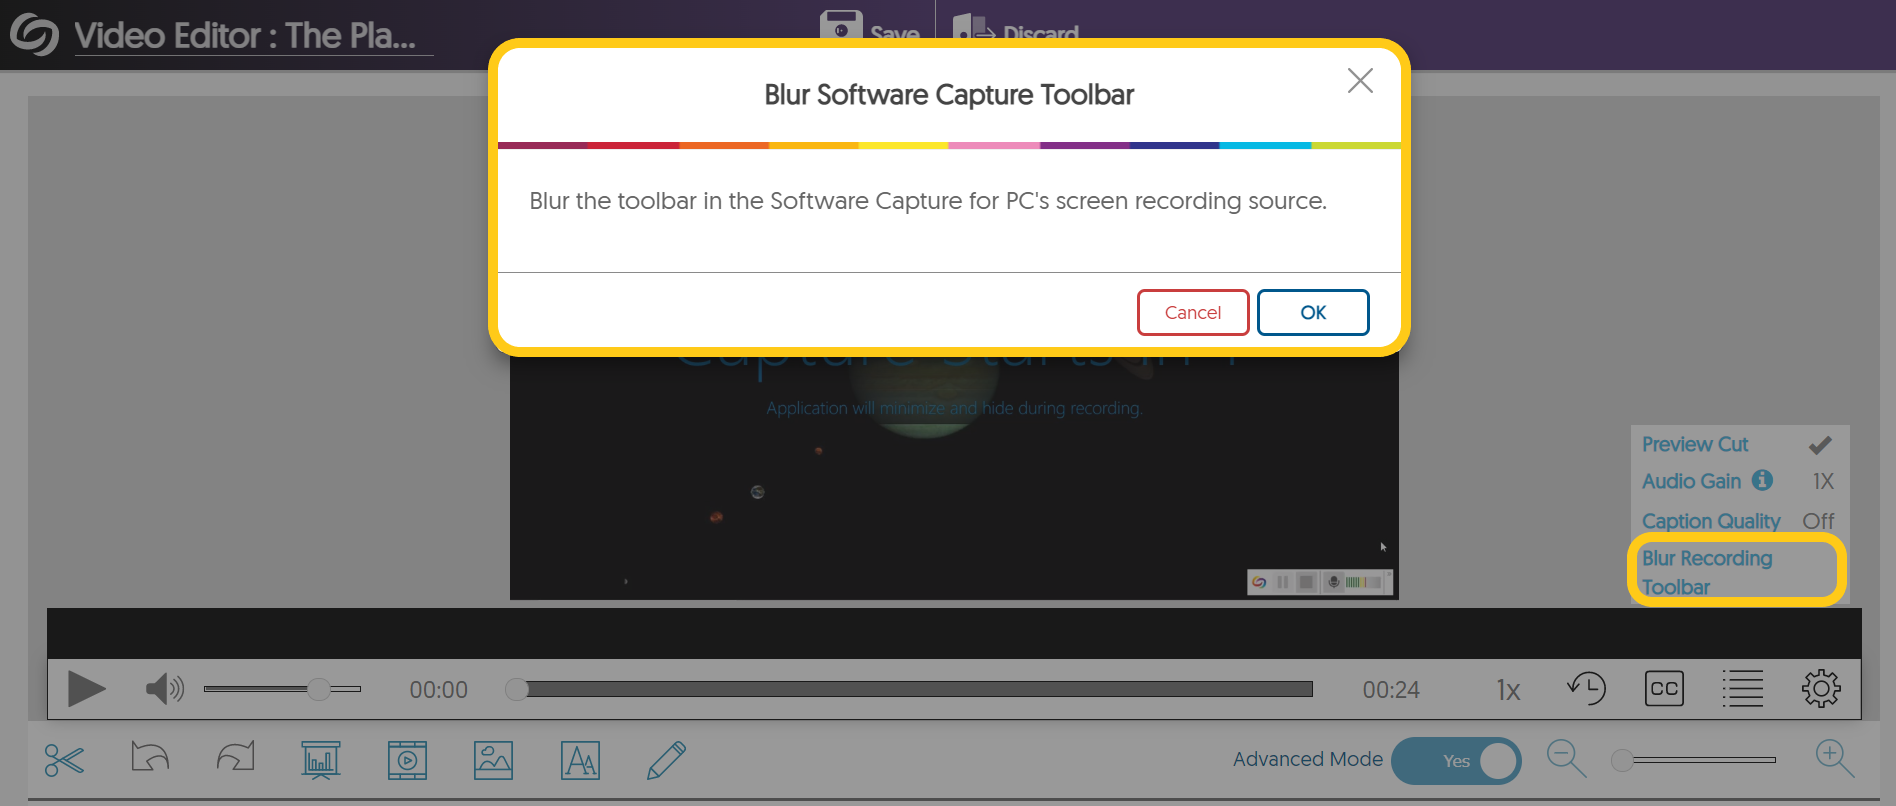 The blur software capture toolbar window.